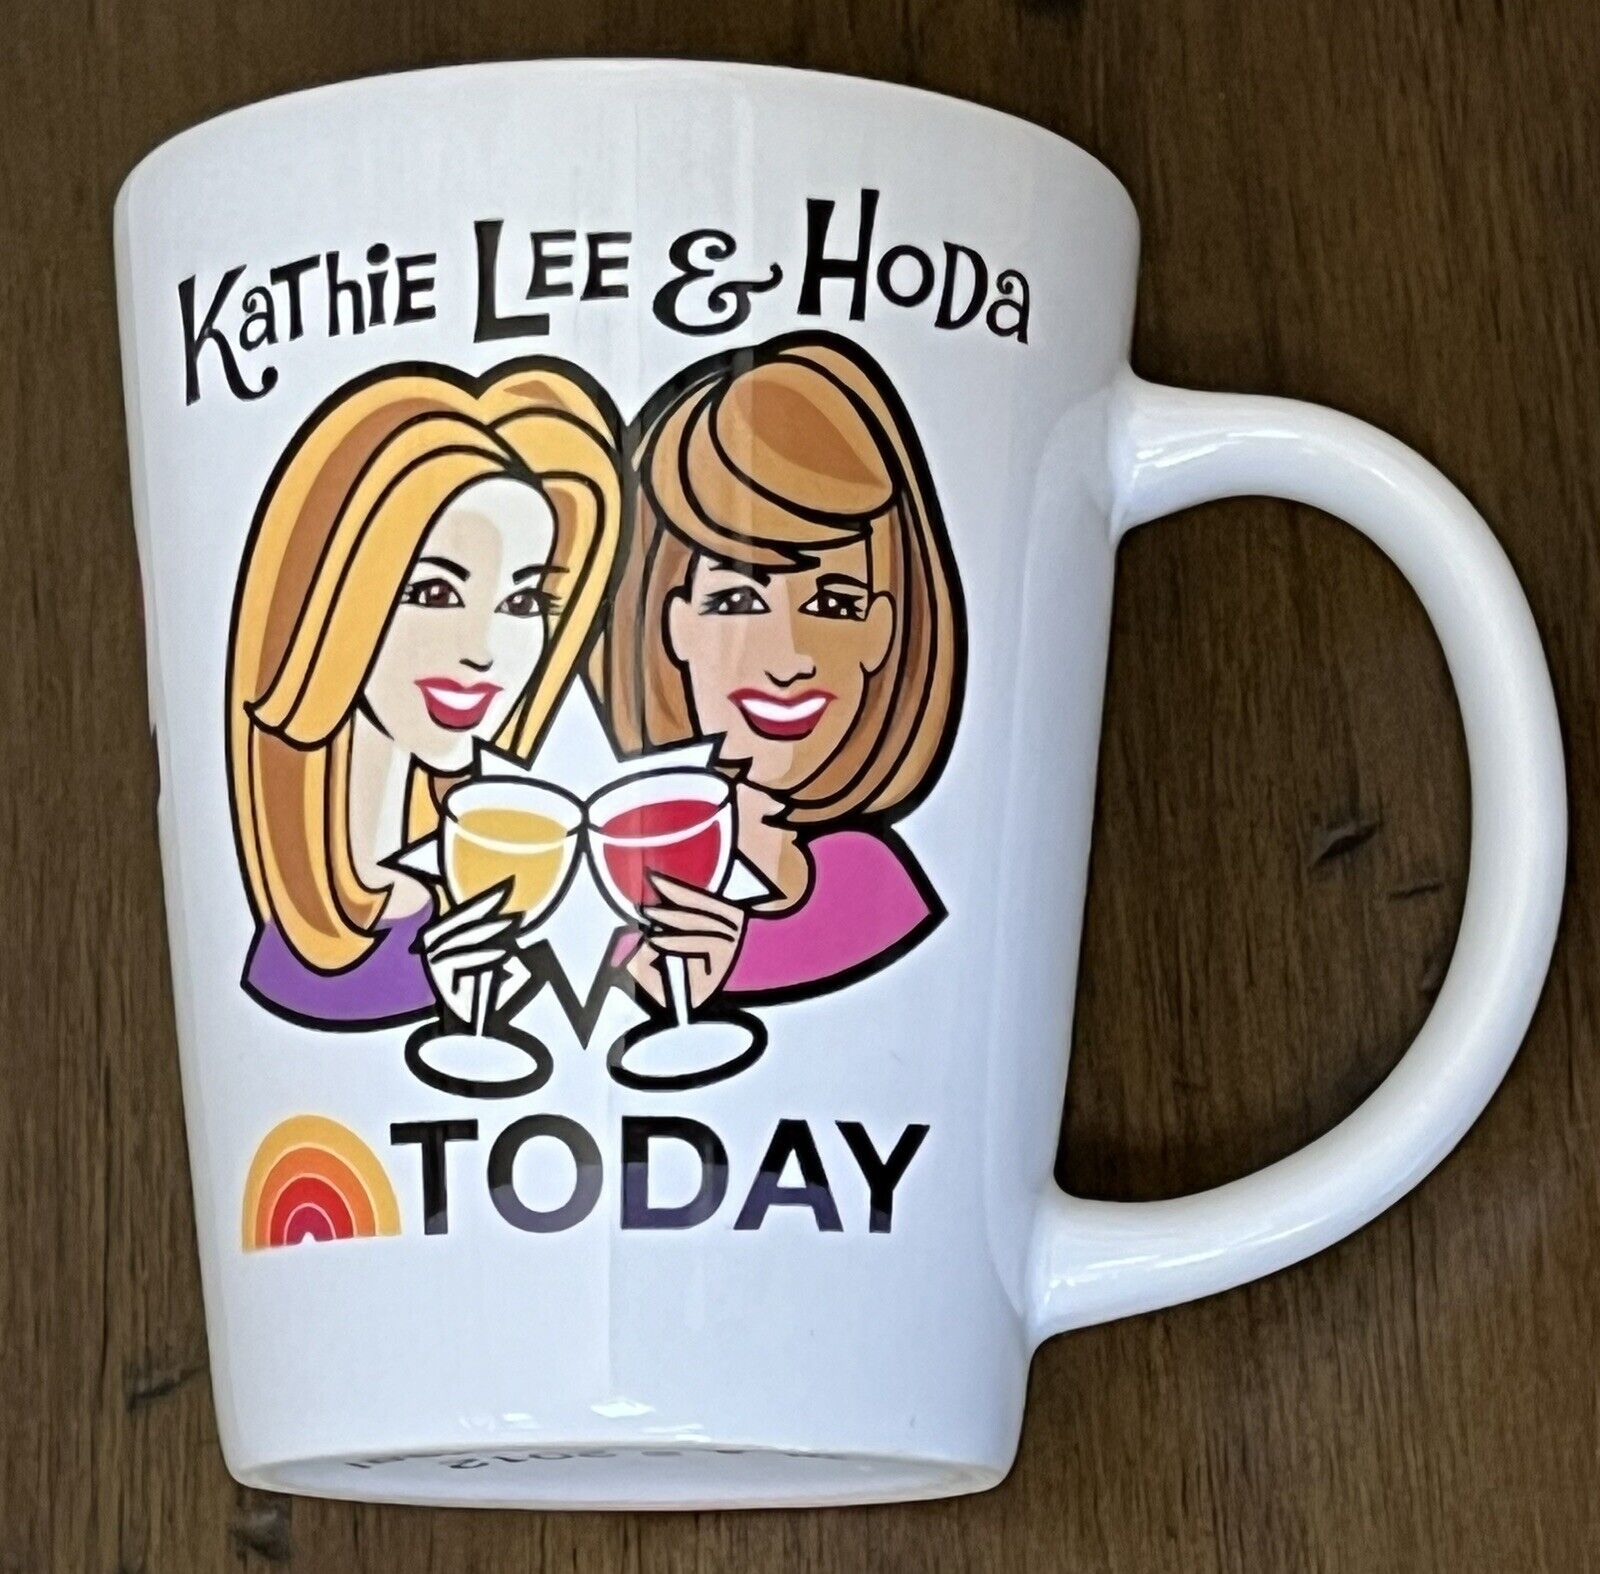 Kathie Lee & Hoda Today Show 2012 NBC Universal Media Coffee Cup Mug Fourth Hour